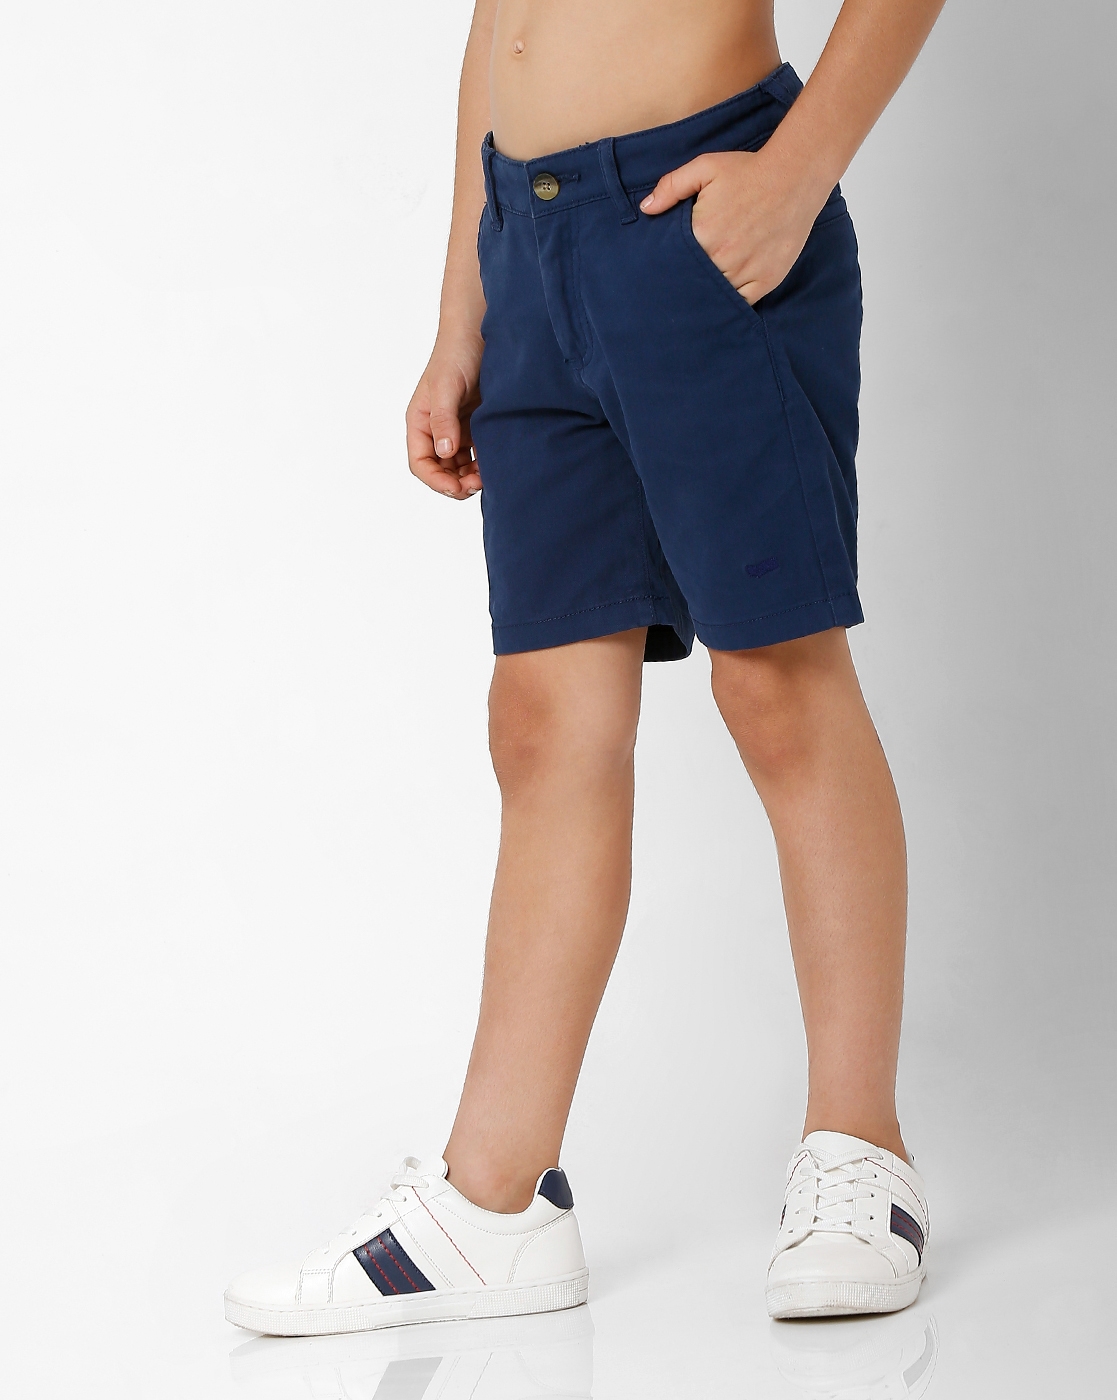 Boys Maso Jr IN Shorts